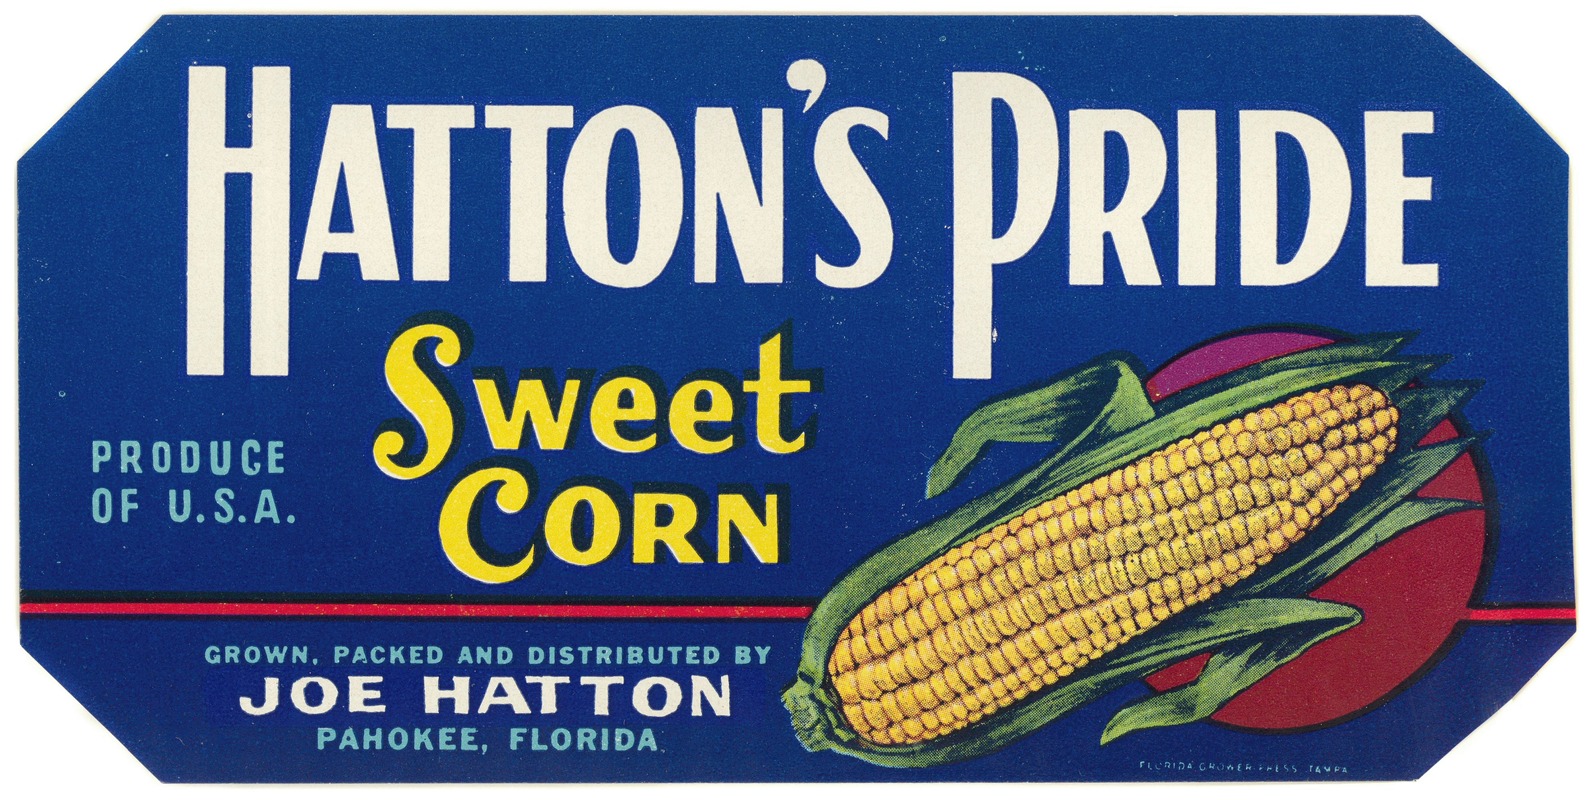 Anonymous - Hatton’s Pride Sweet Corn Label